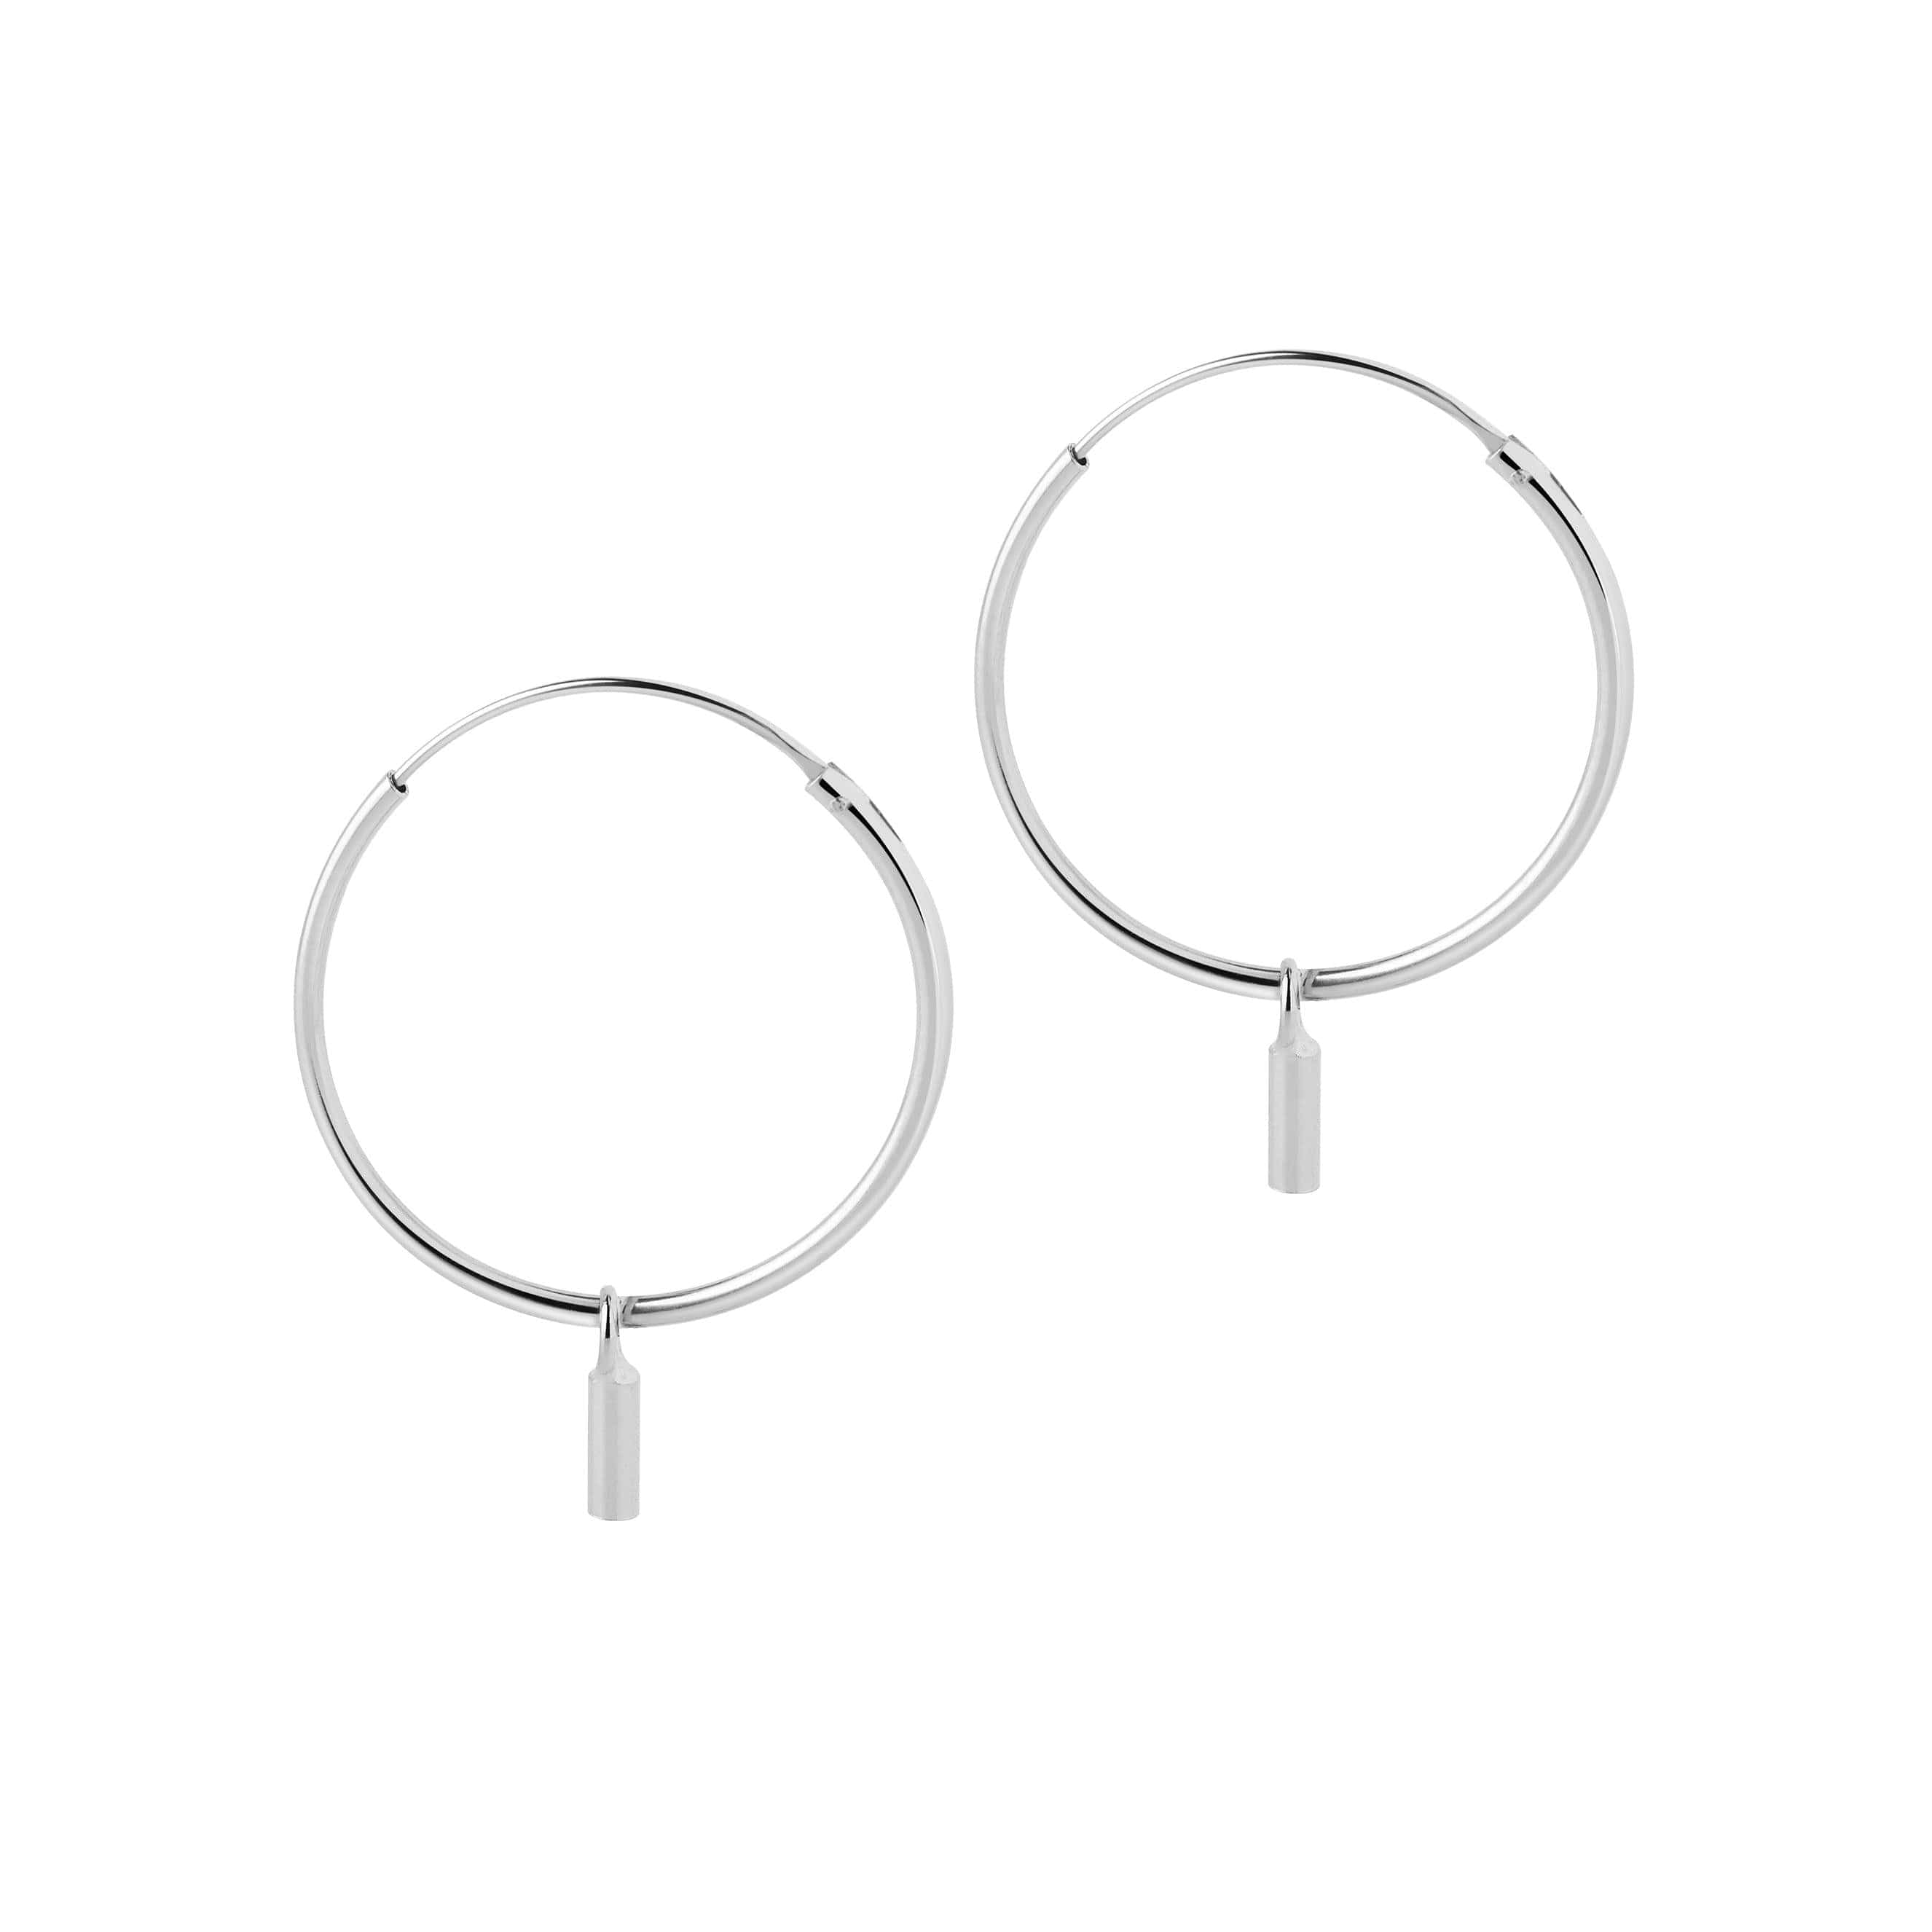 Hoop earrings silver with a rod pendant 22mm